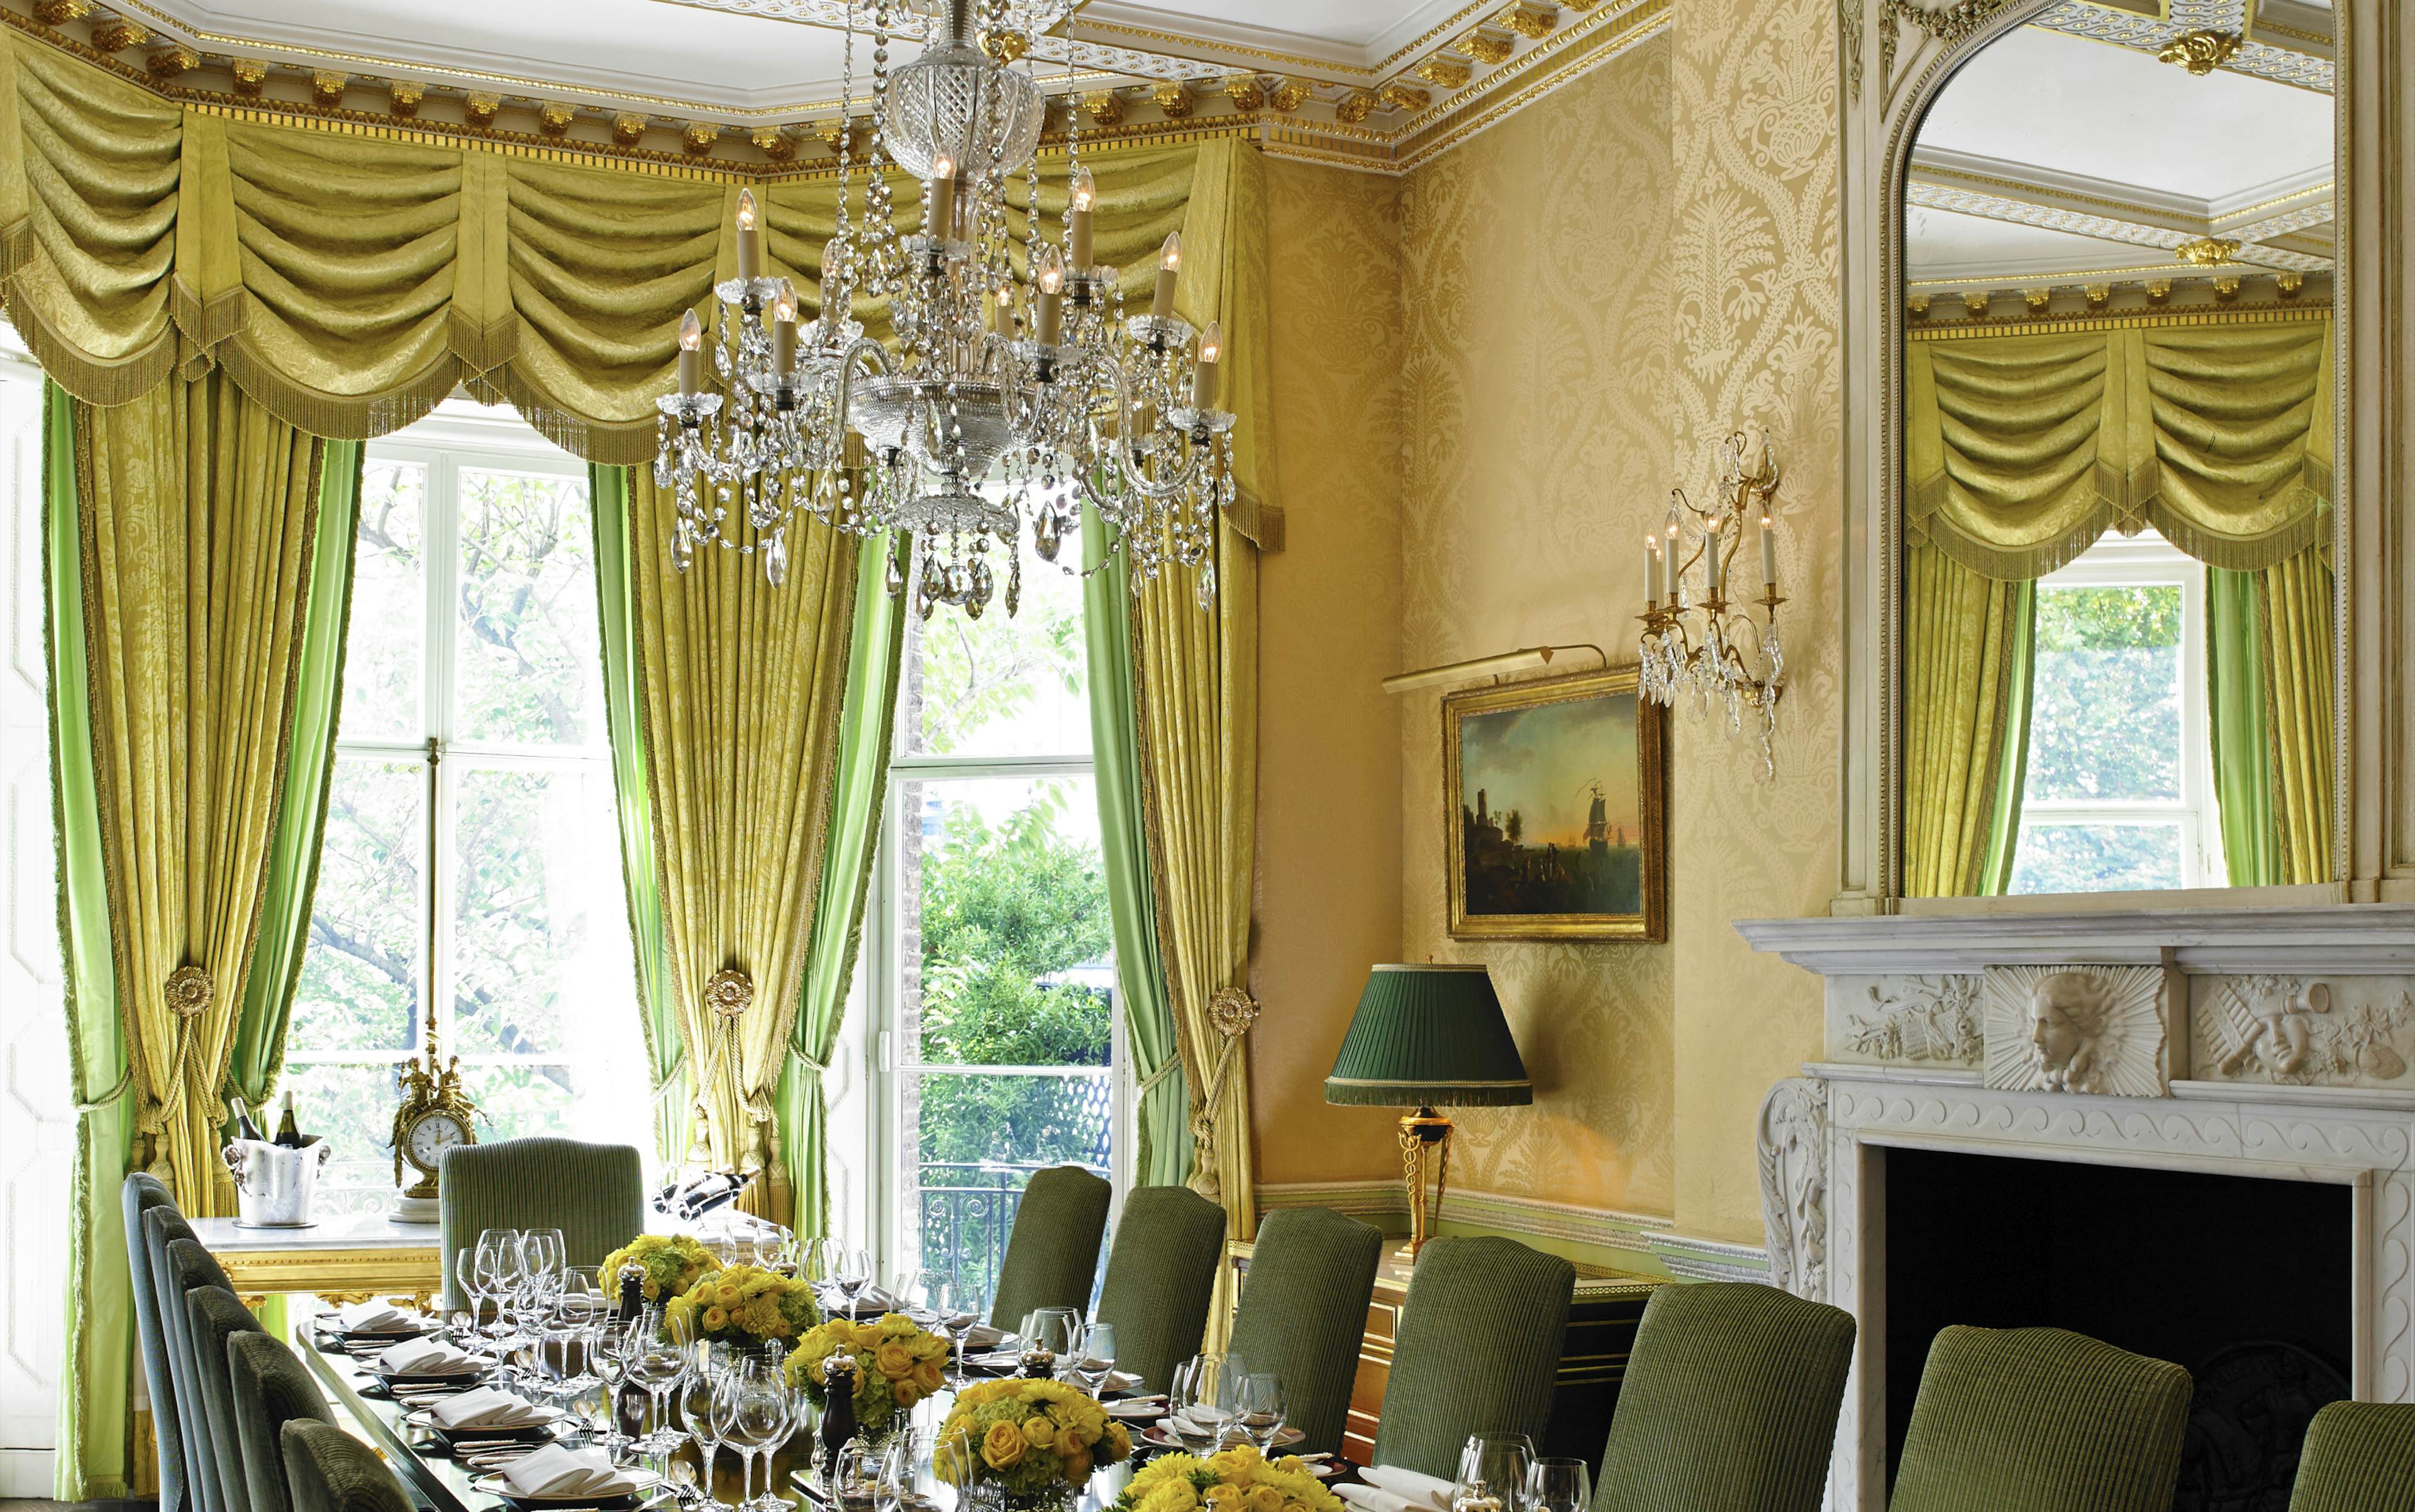 The Ritz London - The Wimborne Room image 1